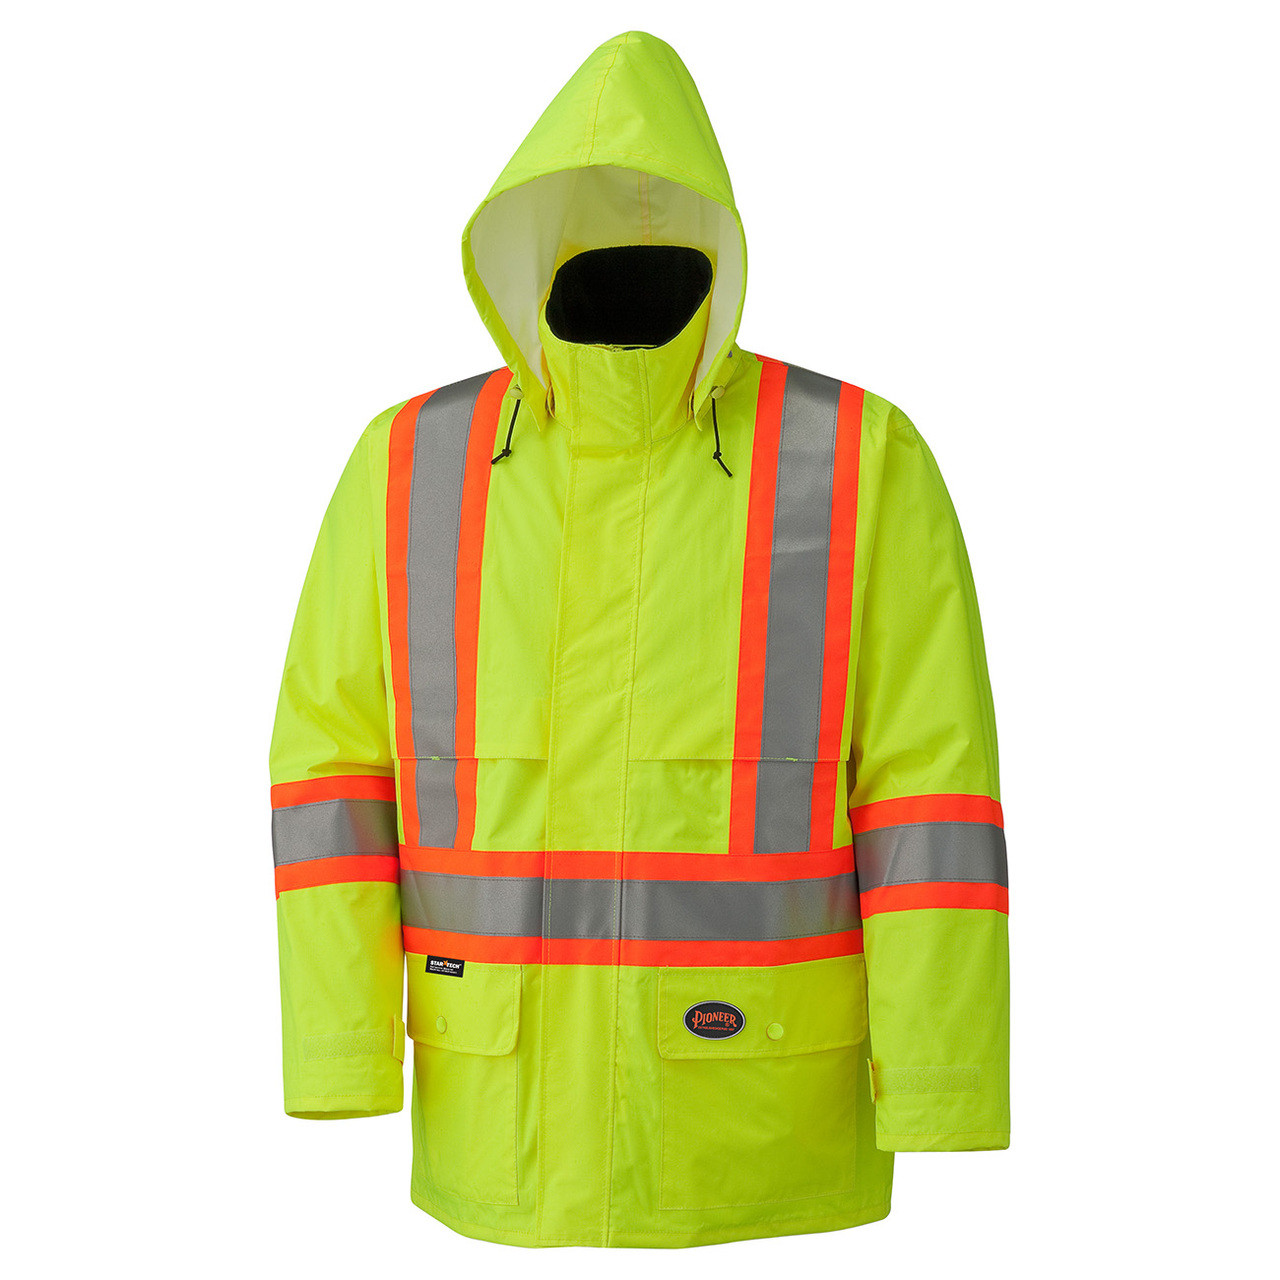 Yellow/Green Hi-Viz 150D Lightweight Safety Jacket with Detachable Hood